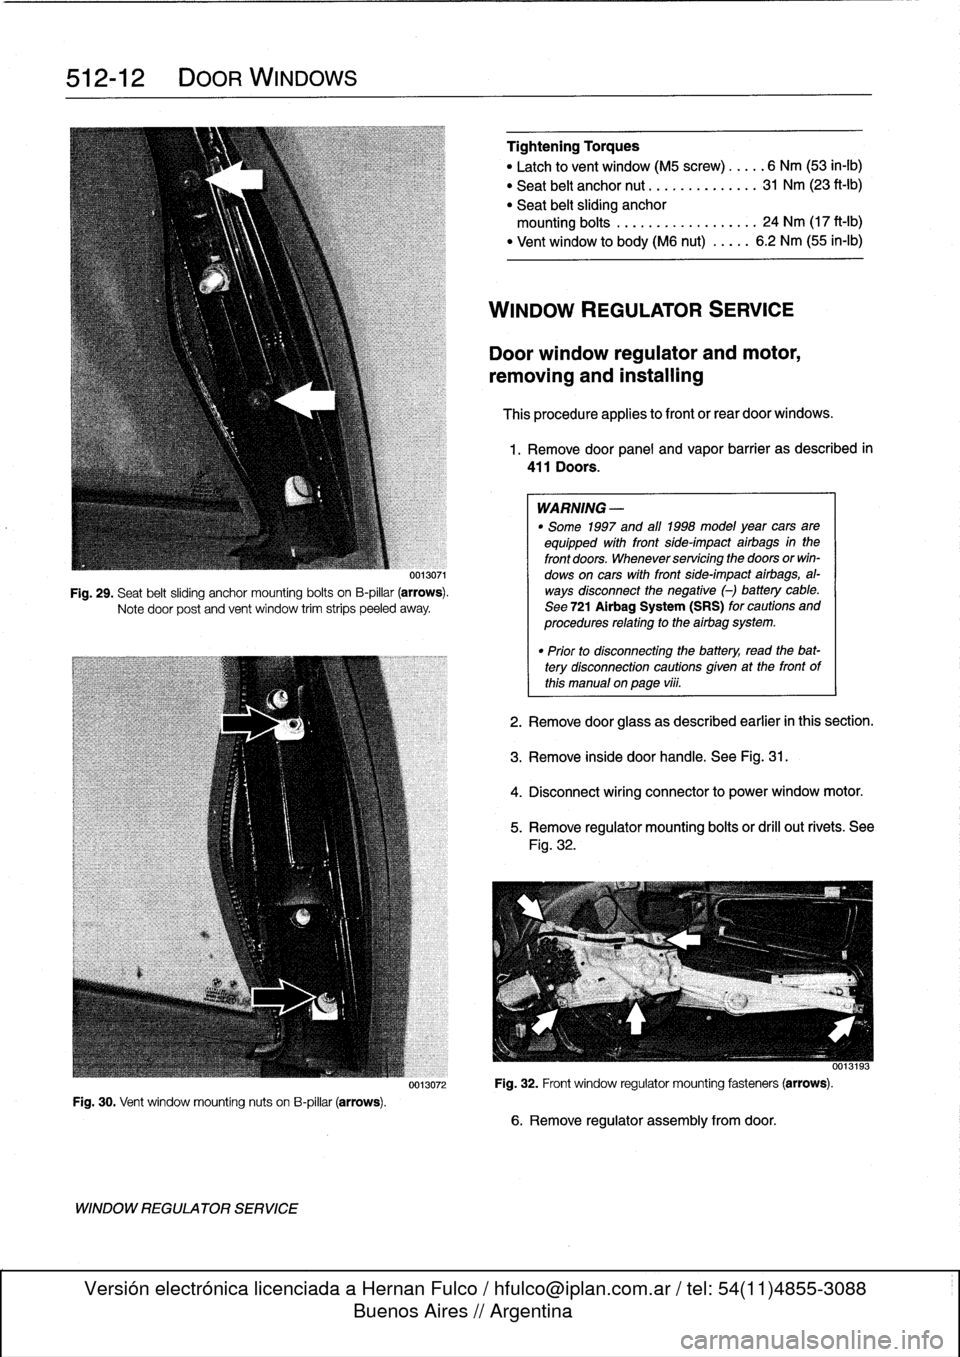 BMW 323i 1995 E36 Service Manual 
512-
1
2

	

DOOR
WINDOWS

Fig
.
30
.
Vent
window
mounting
nuts
on
B-pillar
(arrows)
.

WINDOW
REGULATOR
SERVICE

0013071

Fig
.
29
.
Seat
belt
sliding
anchor
mounting
bolts
on
B-pillar
(arrows)
.

N